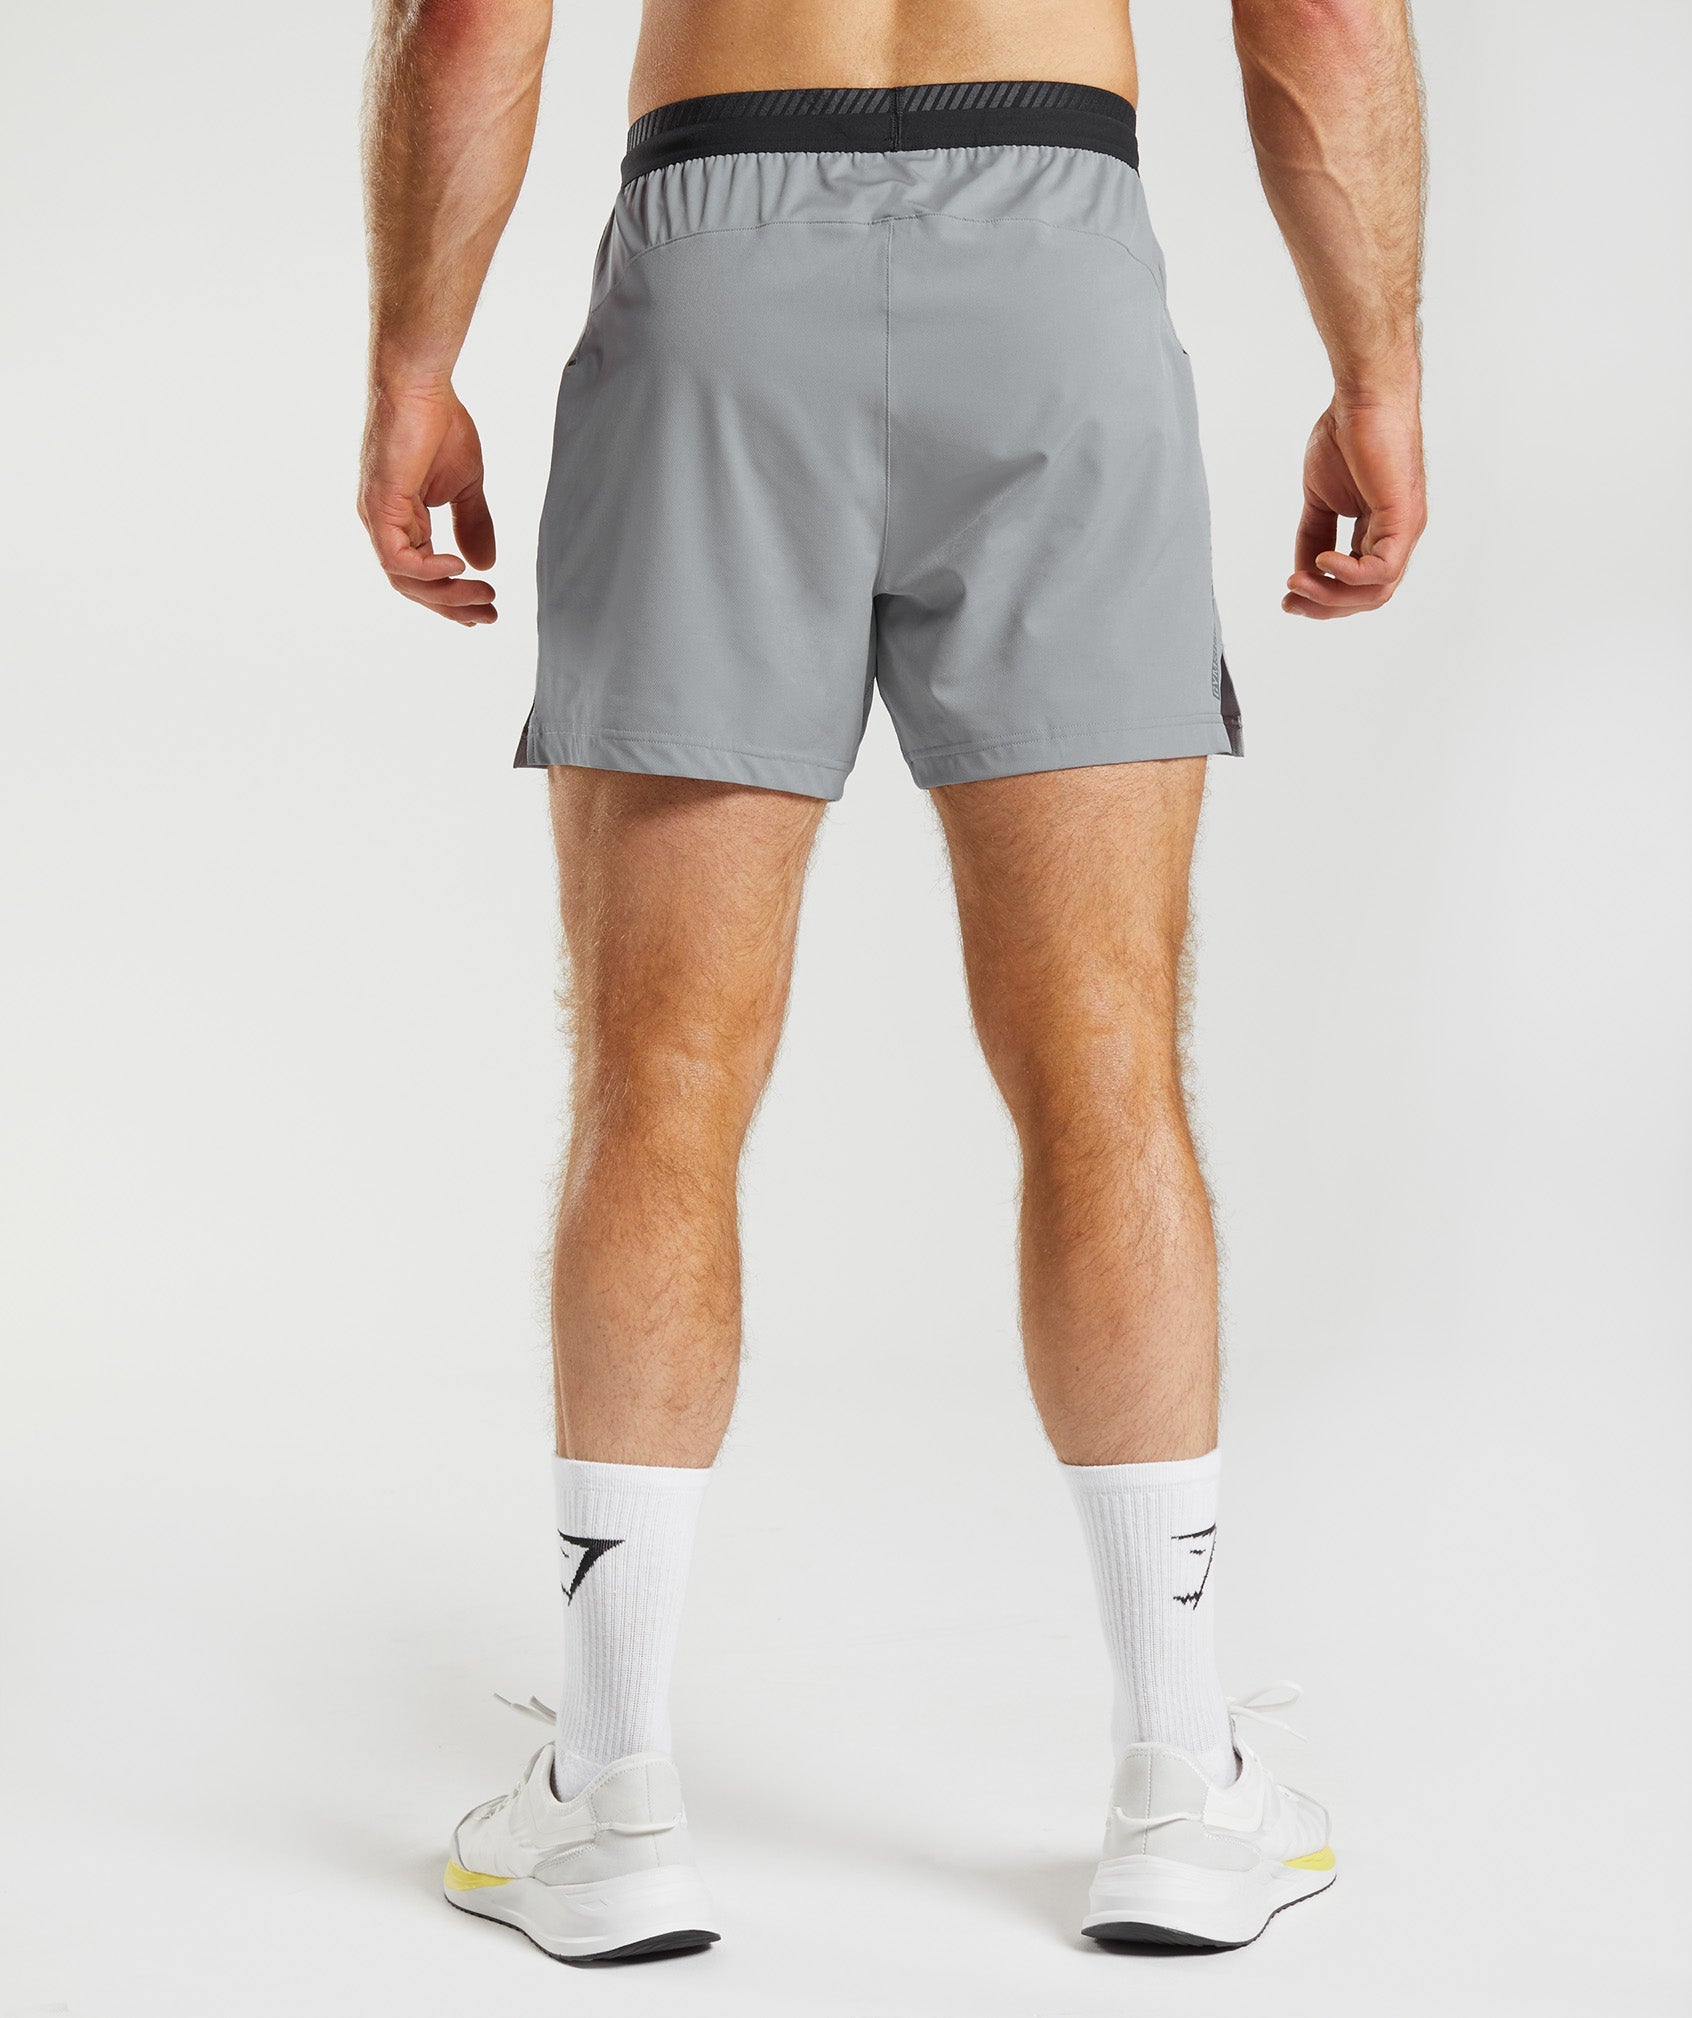 Apex 5" Hybrid Shorts in Drift Grey - view 2